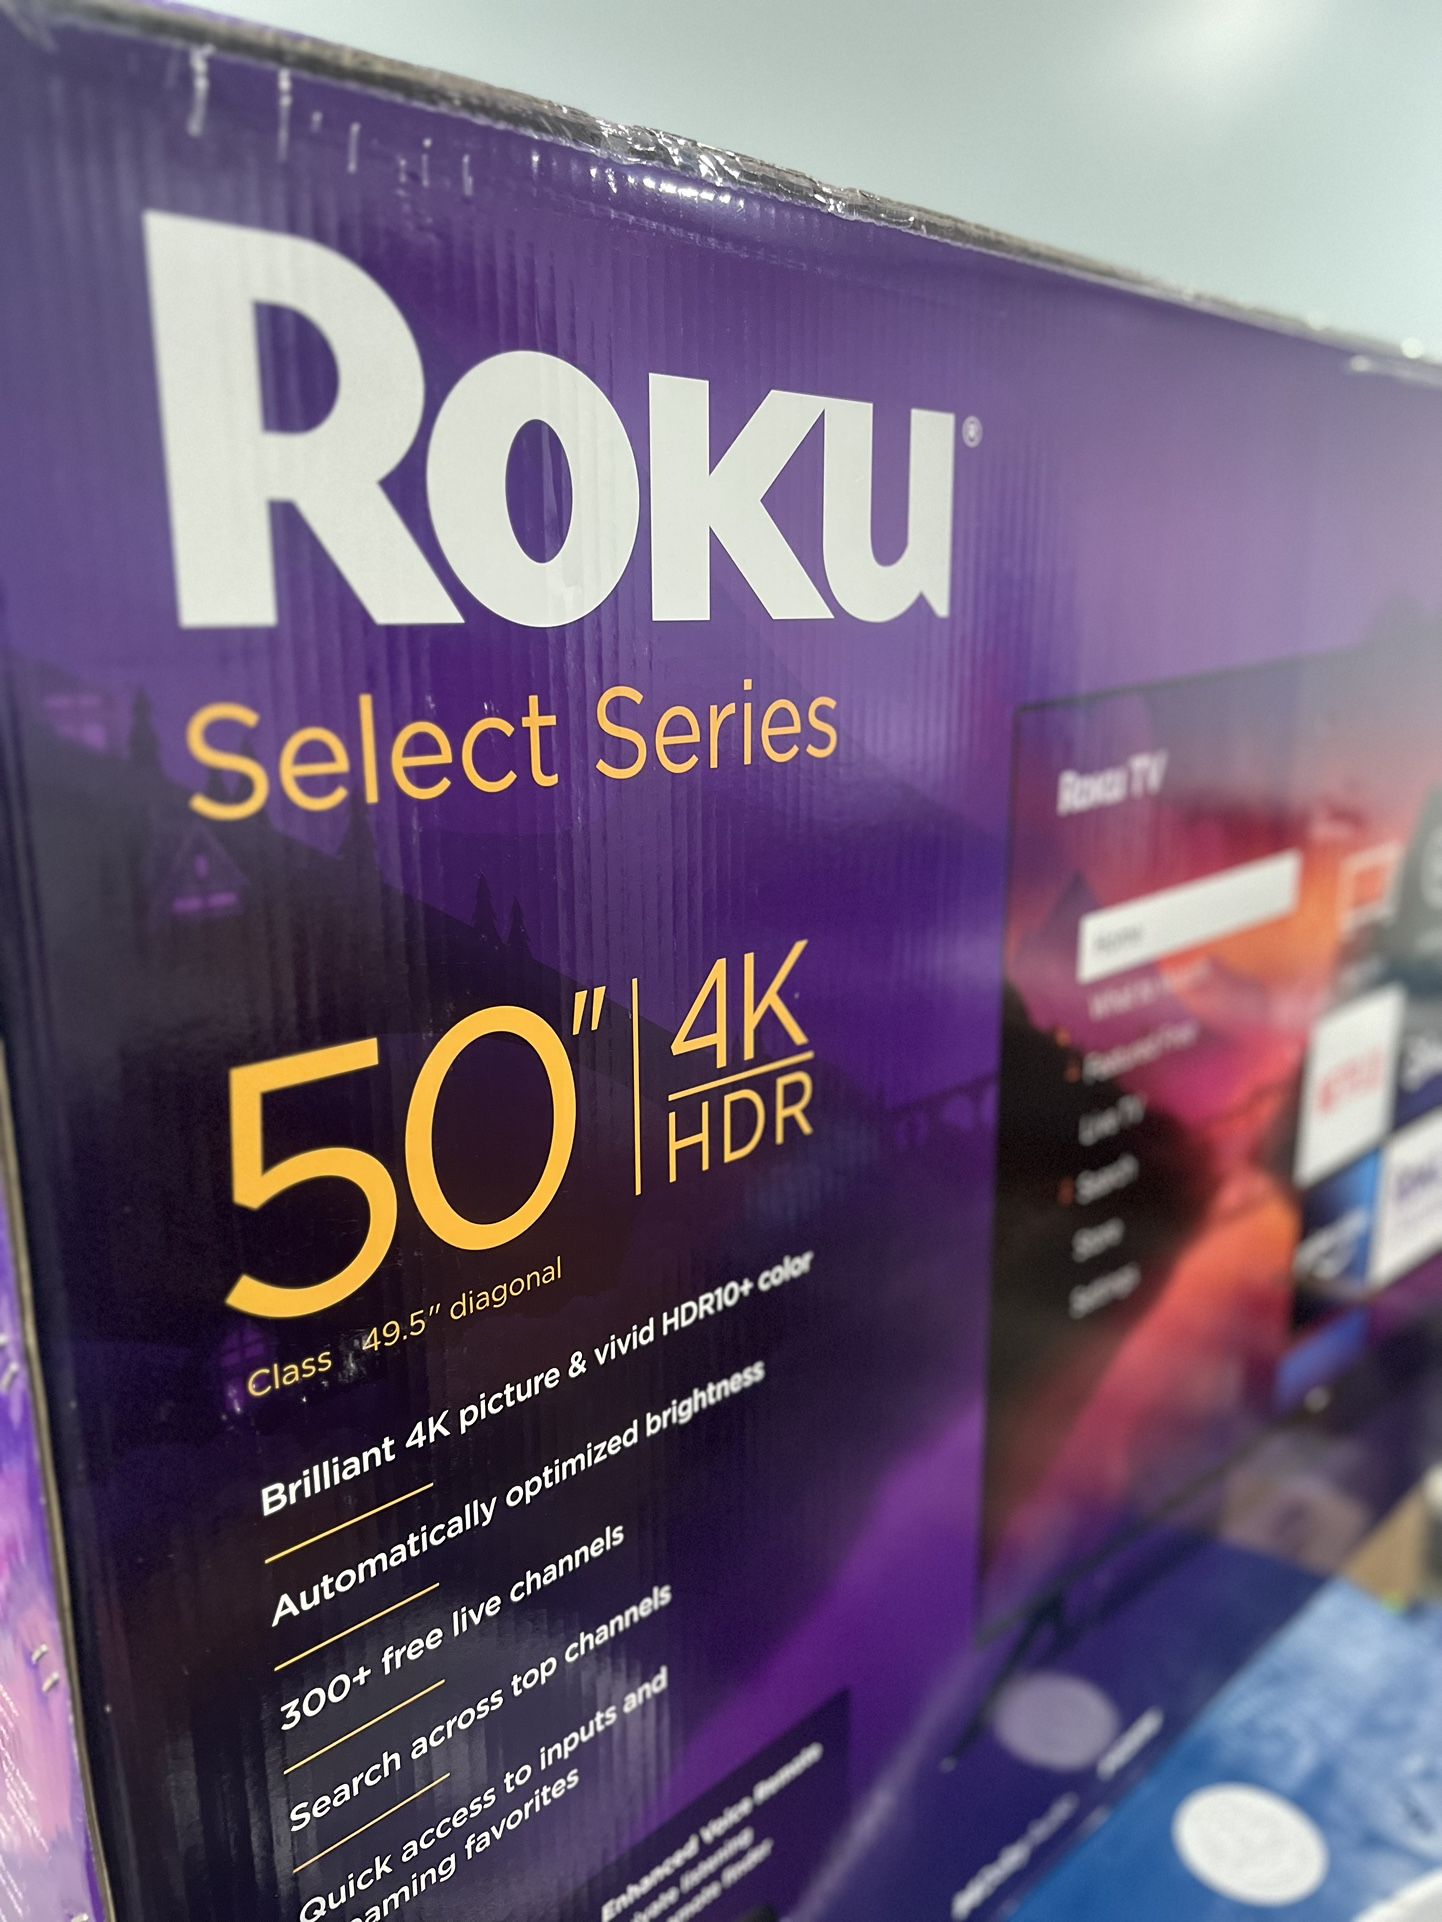 Roku Select Series